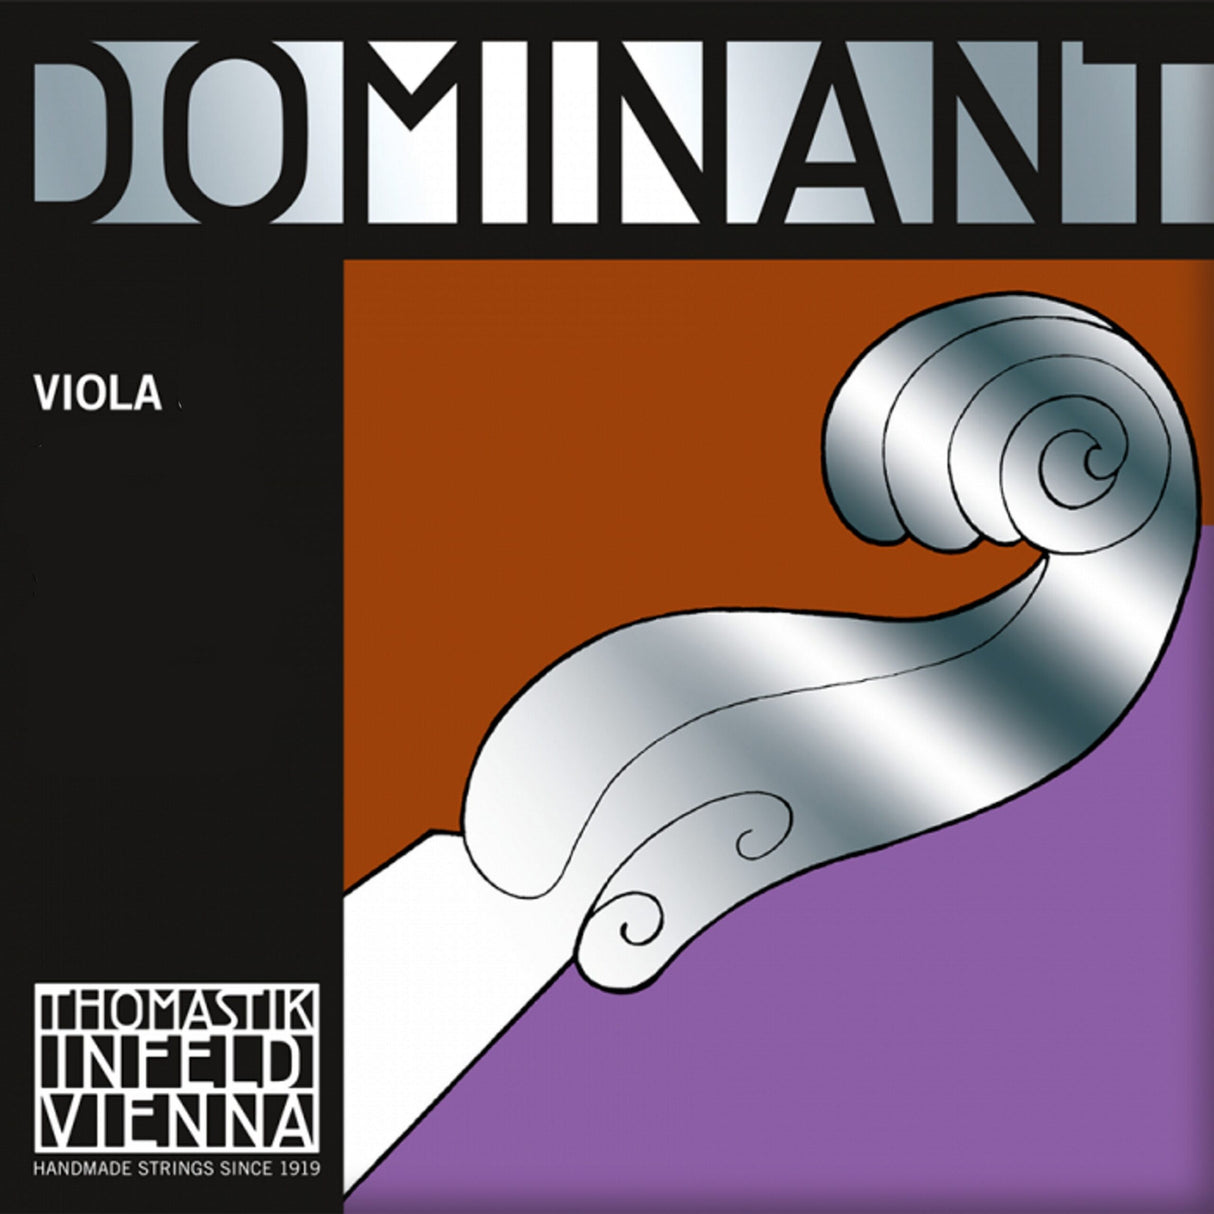 Thomastik-Infeld 138T Dominant Viola G Strings, Tube of 12, 14.5 - 15 Inch